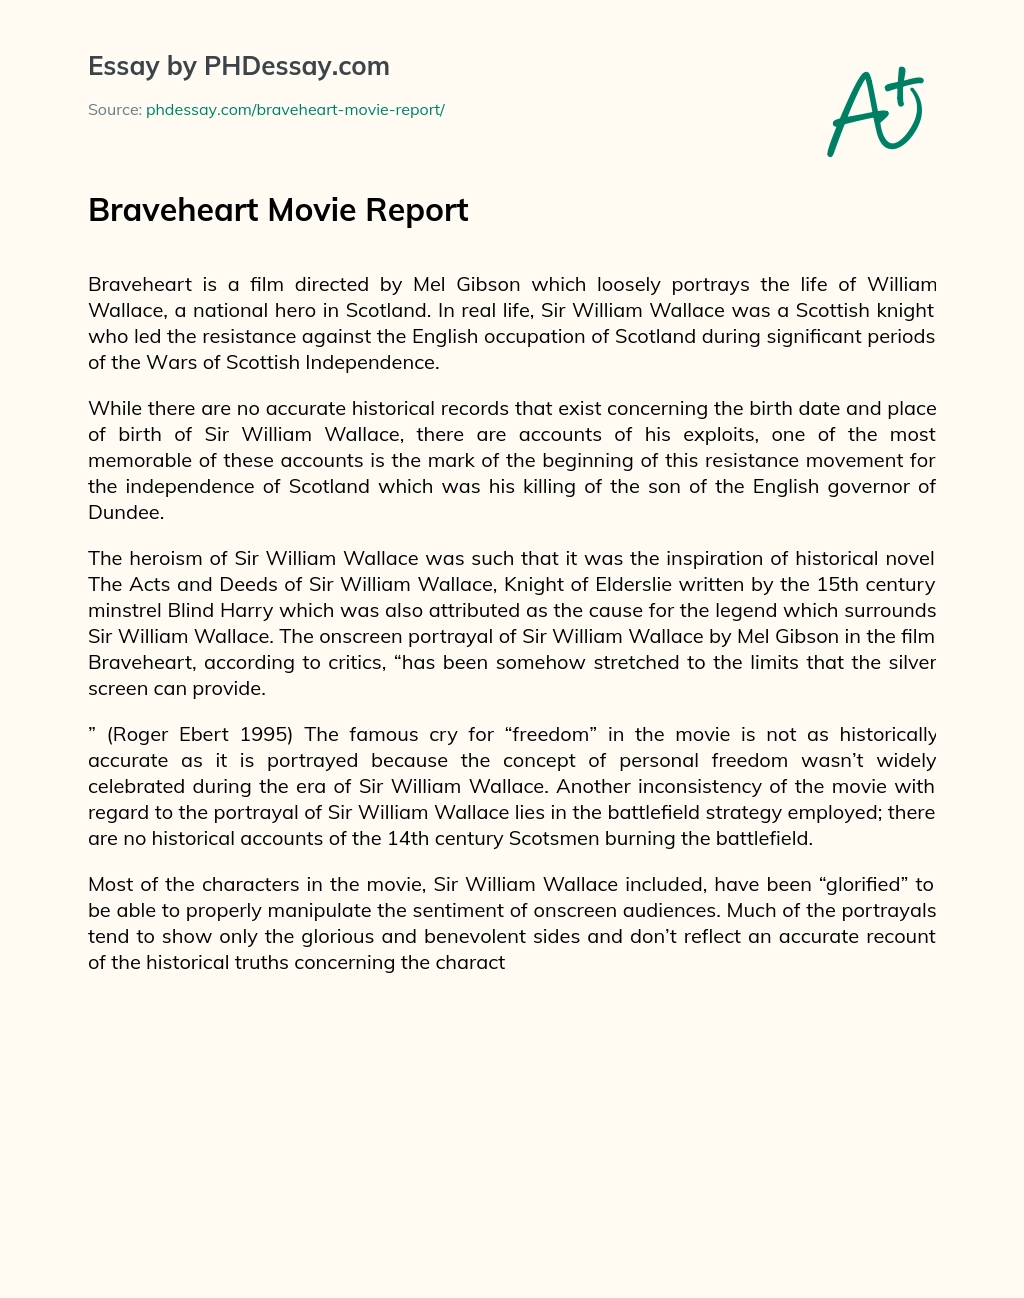 Braveheart Movie Report essay